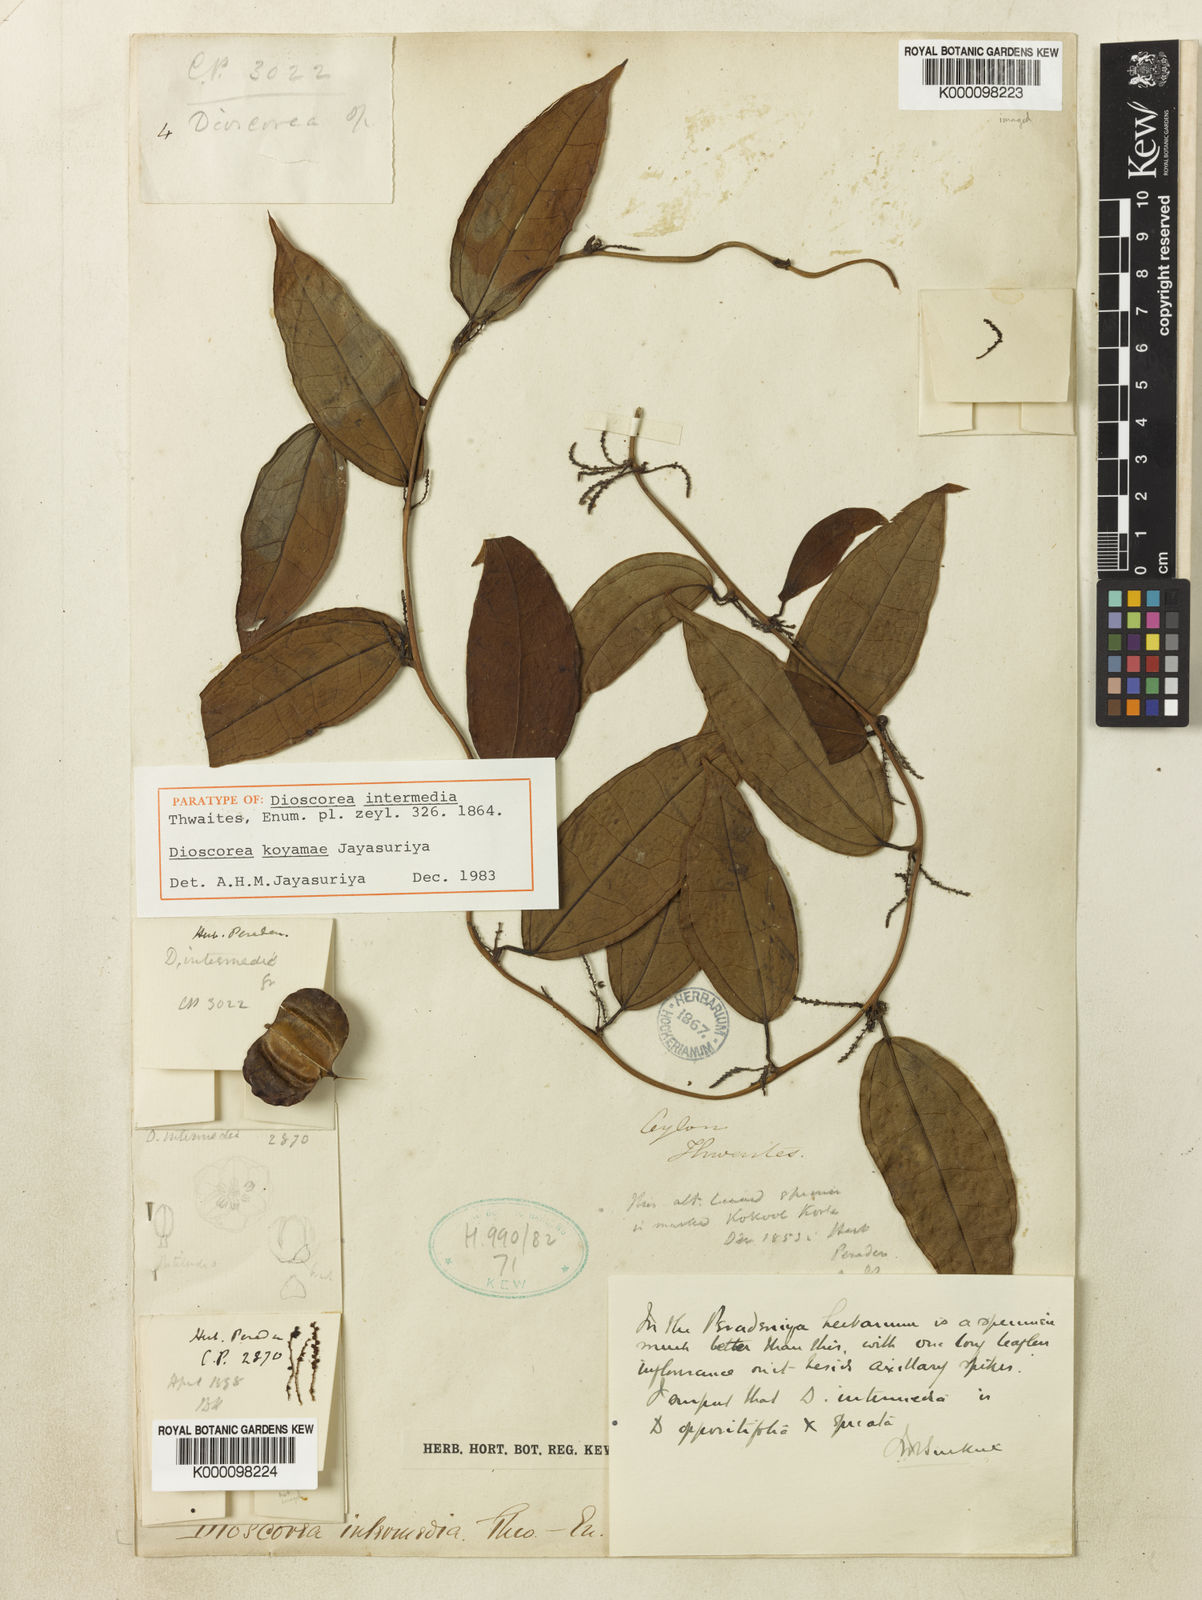 Illustration Dioscorea intermedia, Par inconnu, via kew 